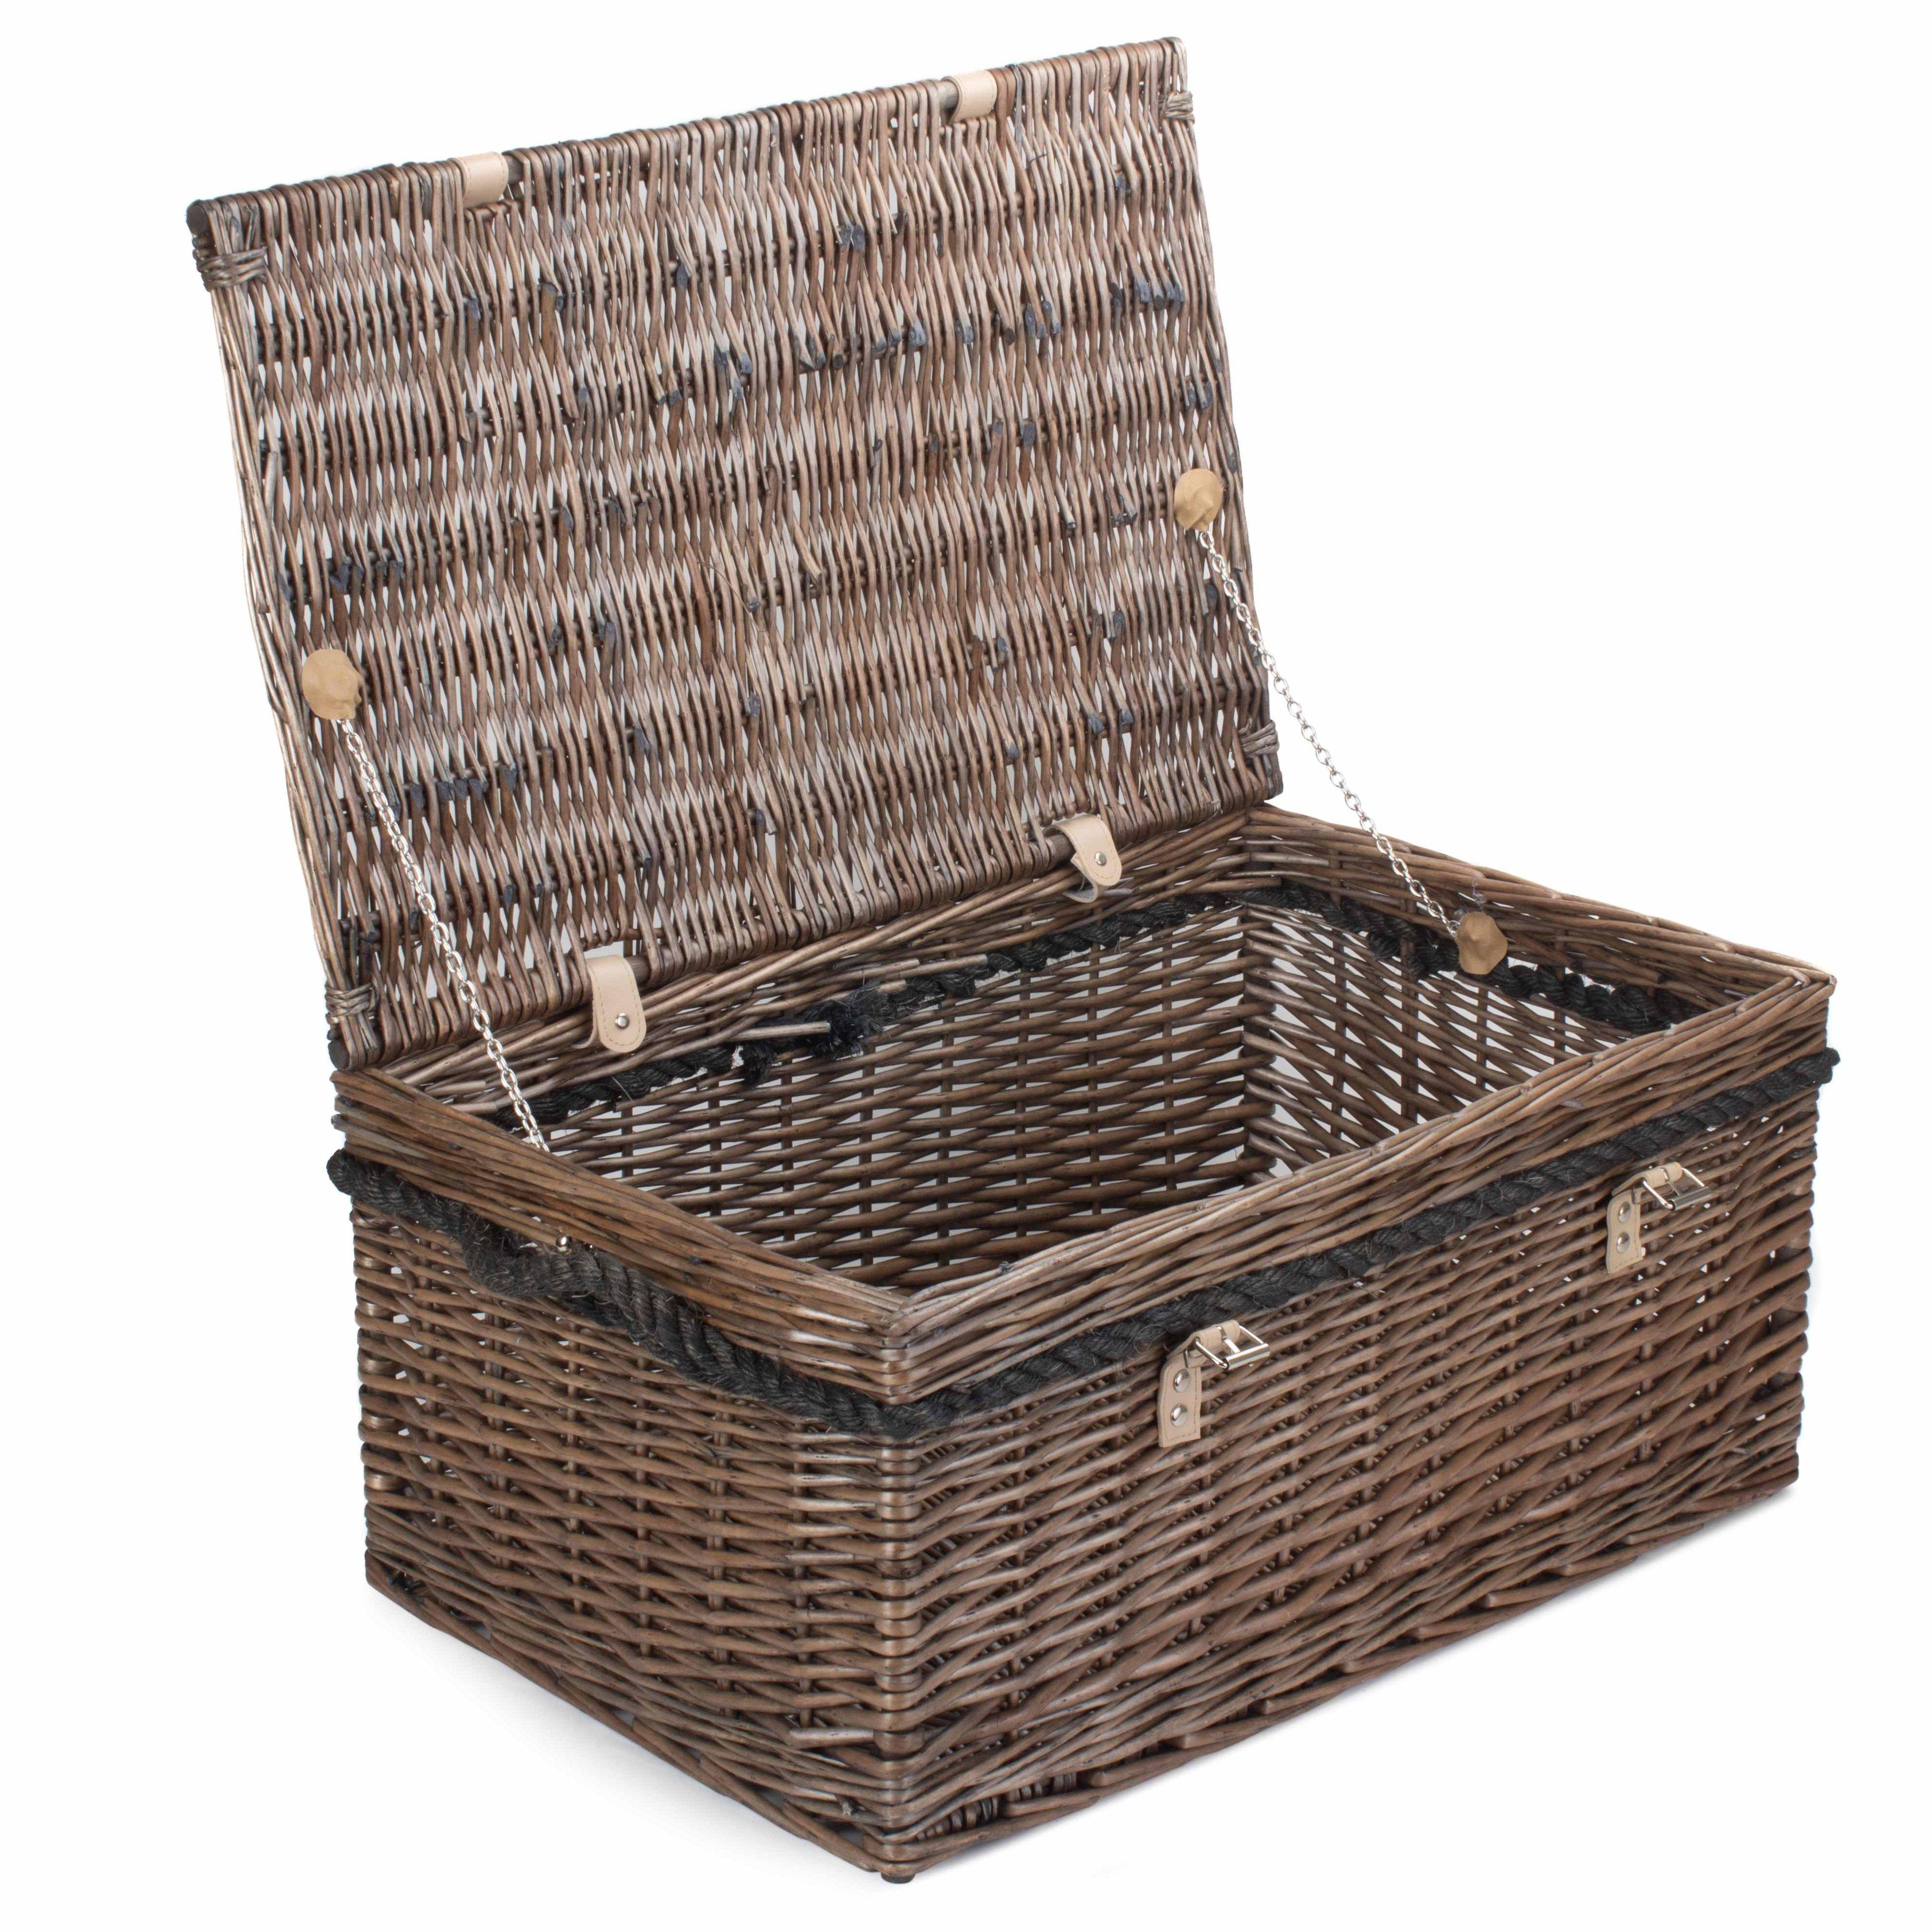 Wicker 62cm Antique Wash Picnic Basket